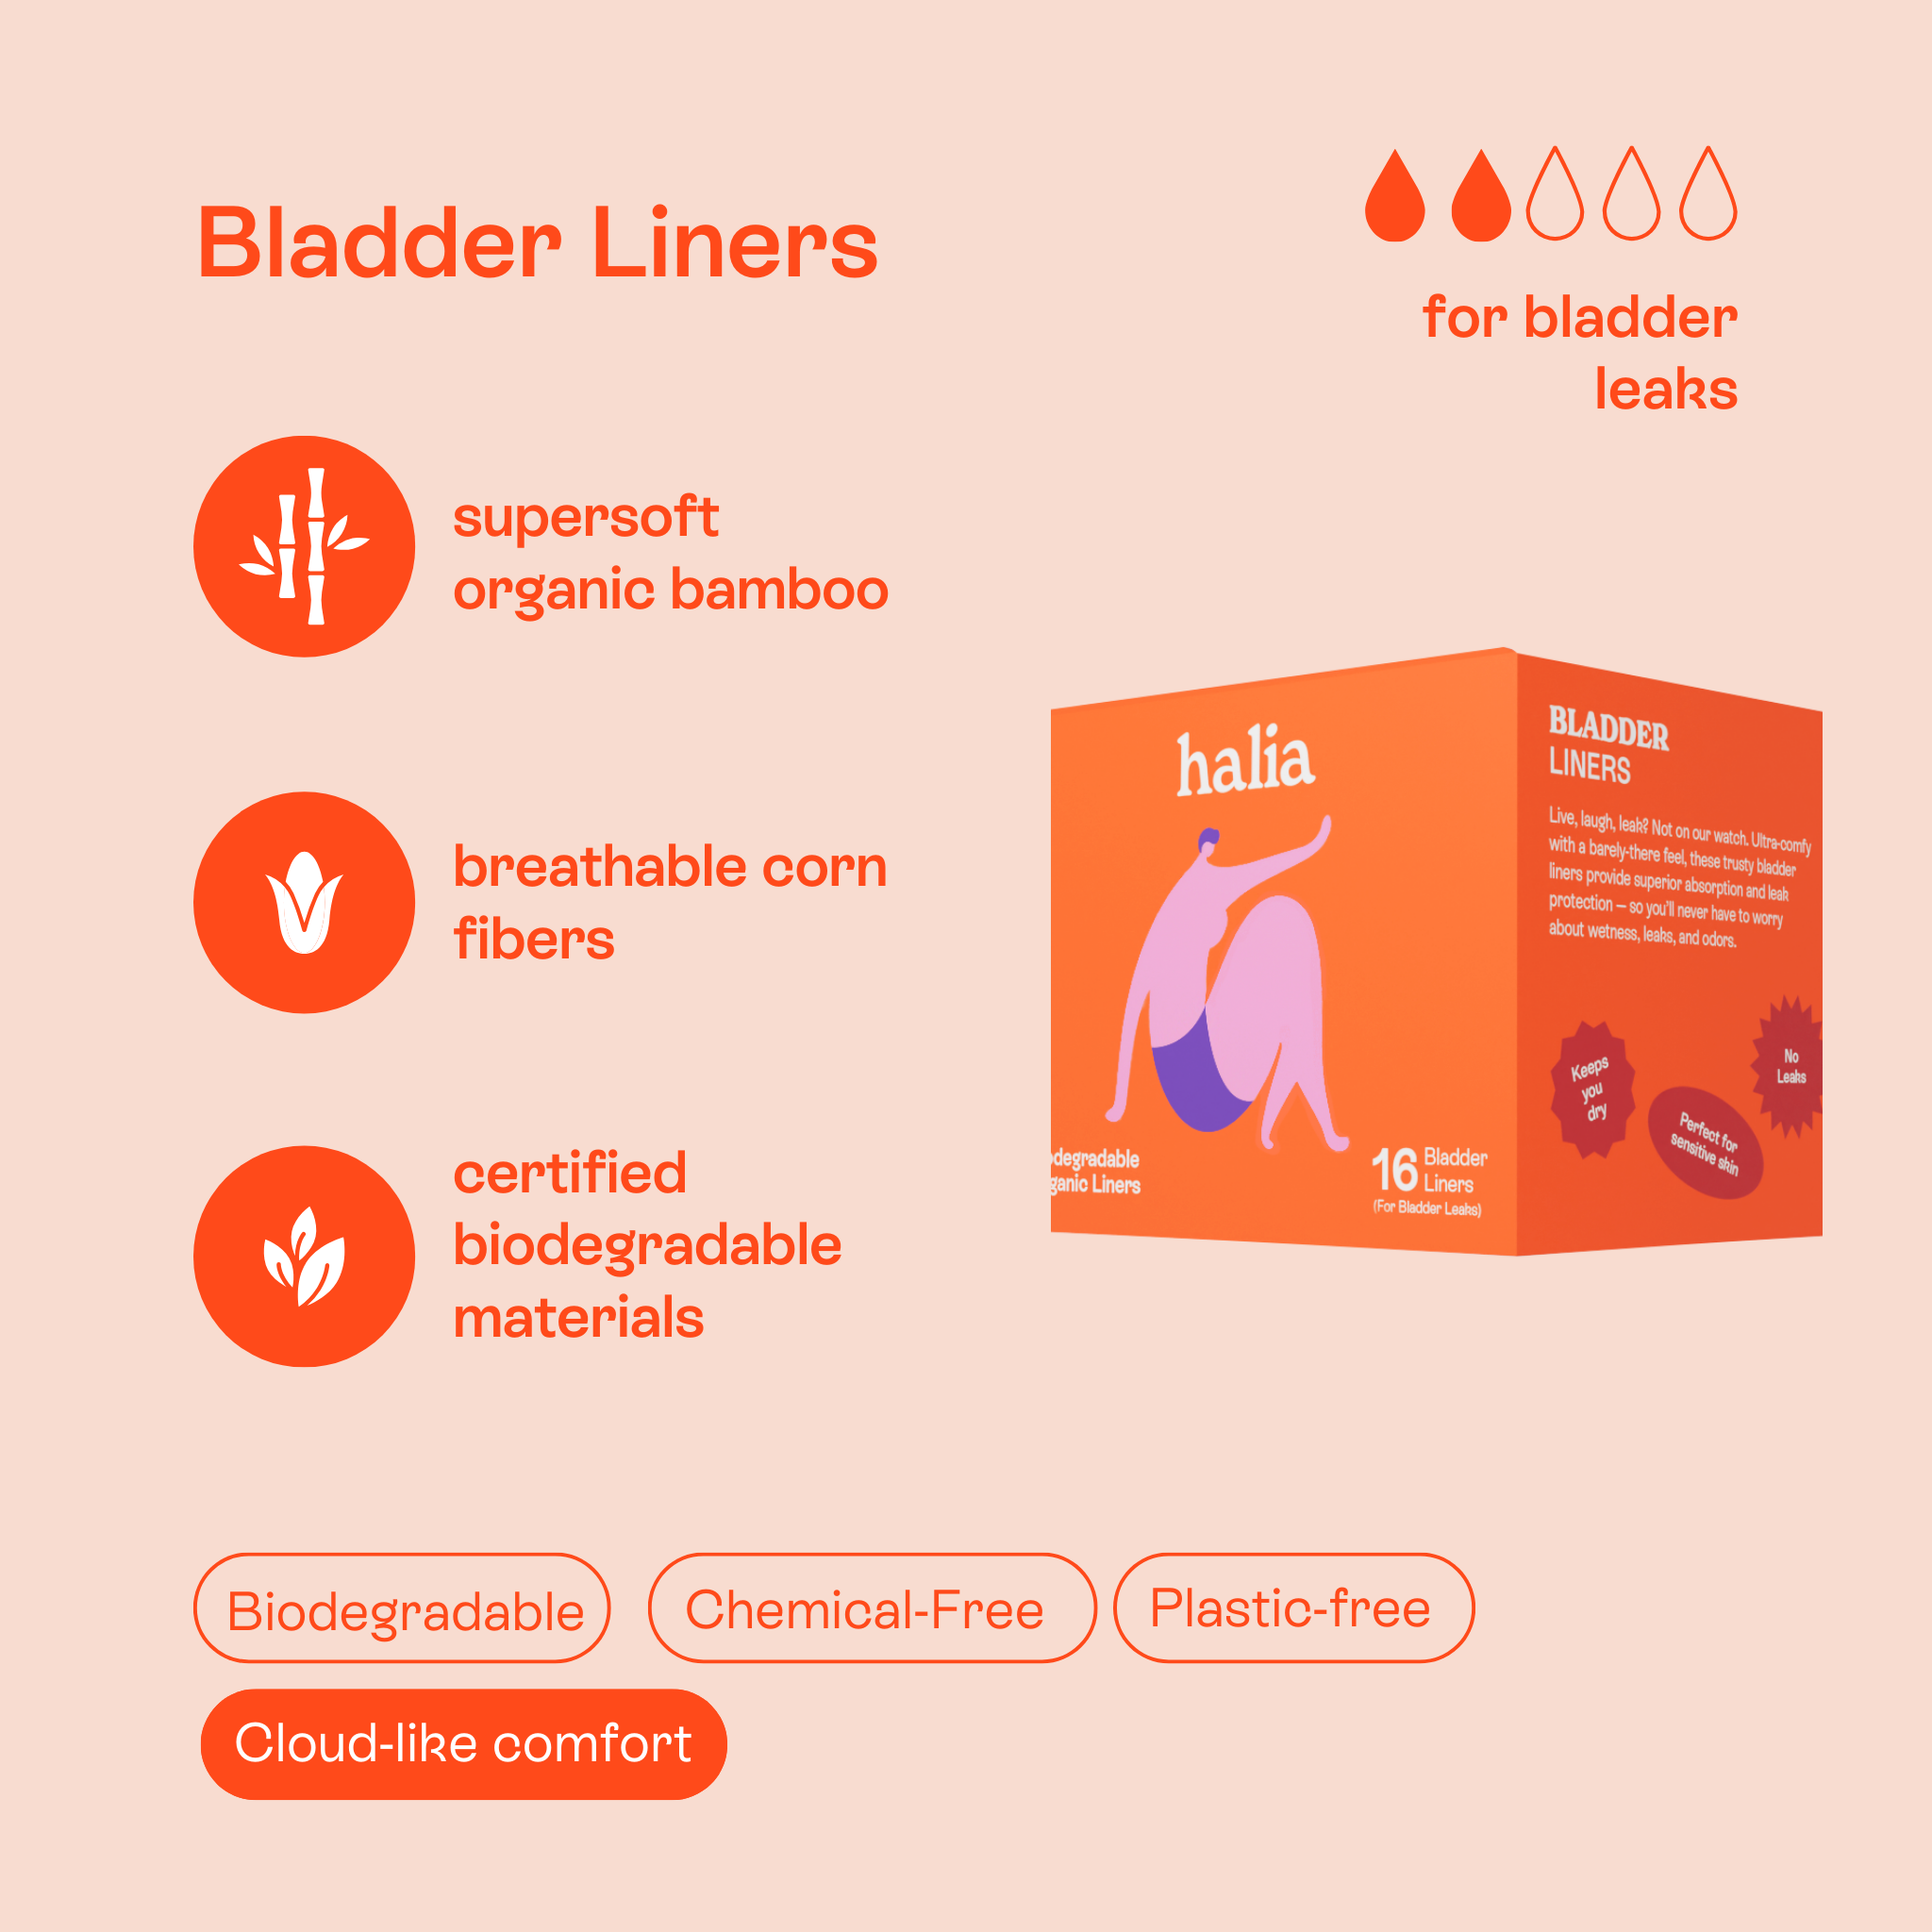 Bladder Liners